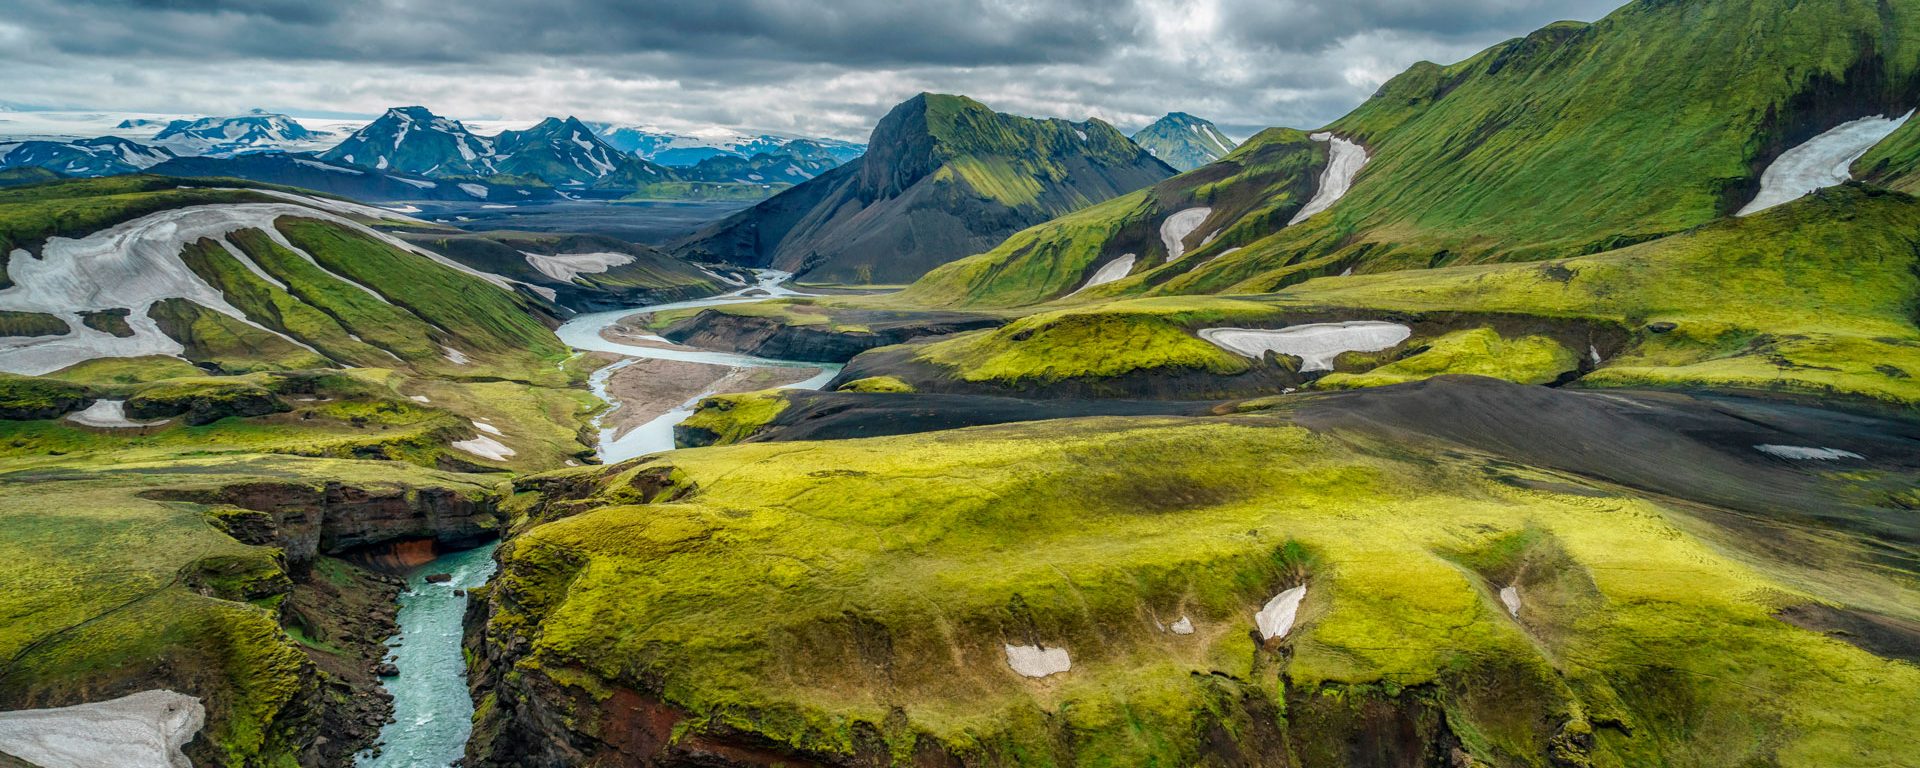 Top 5 Natural Wonders of Reykjavik | The Planet D